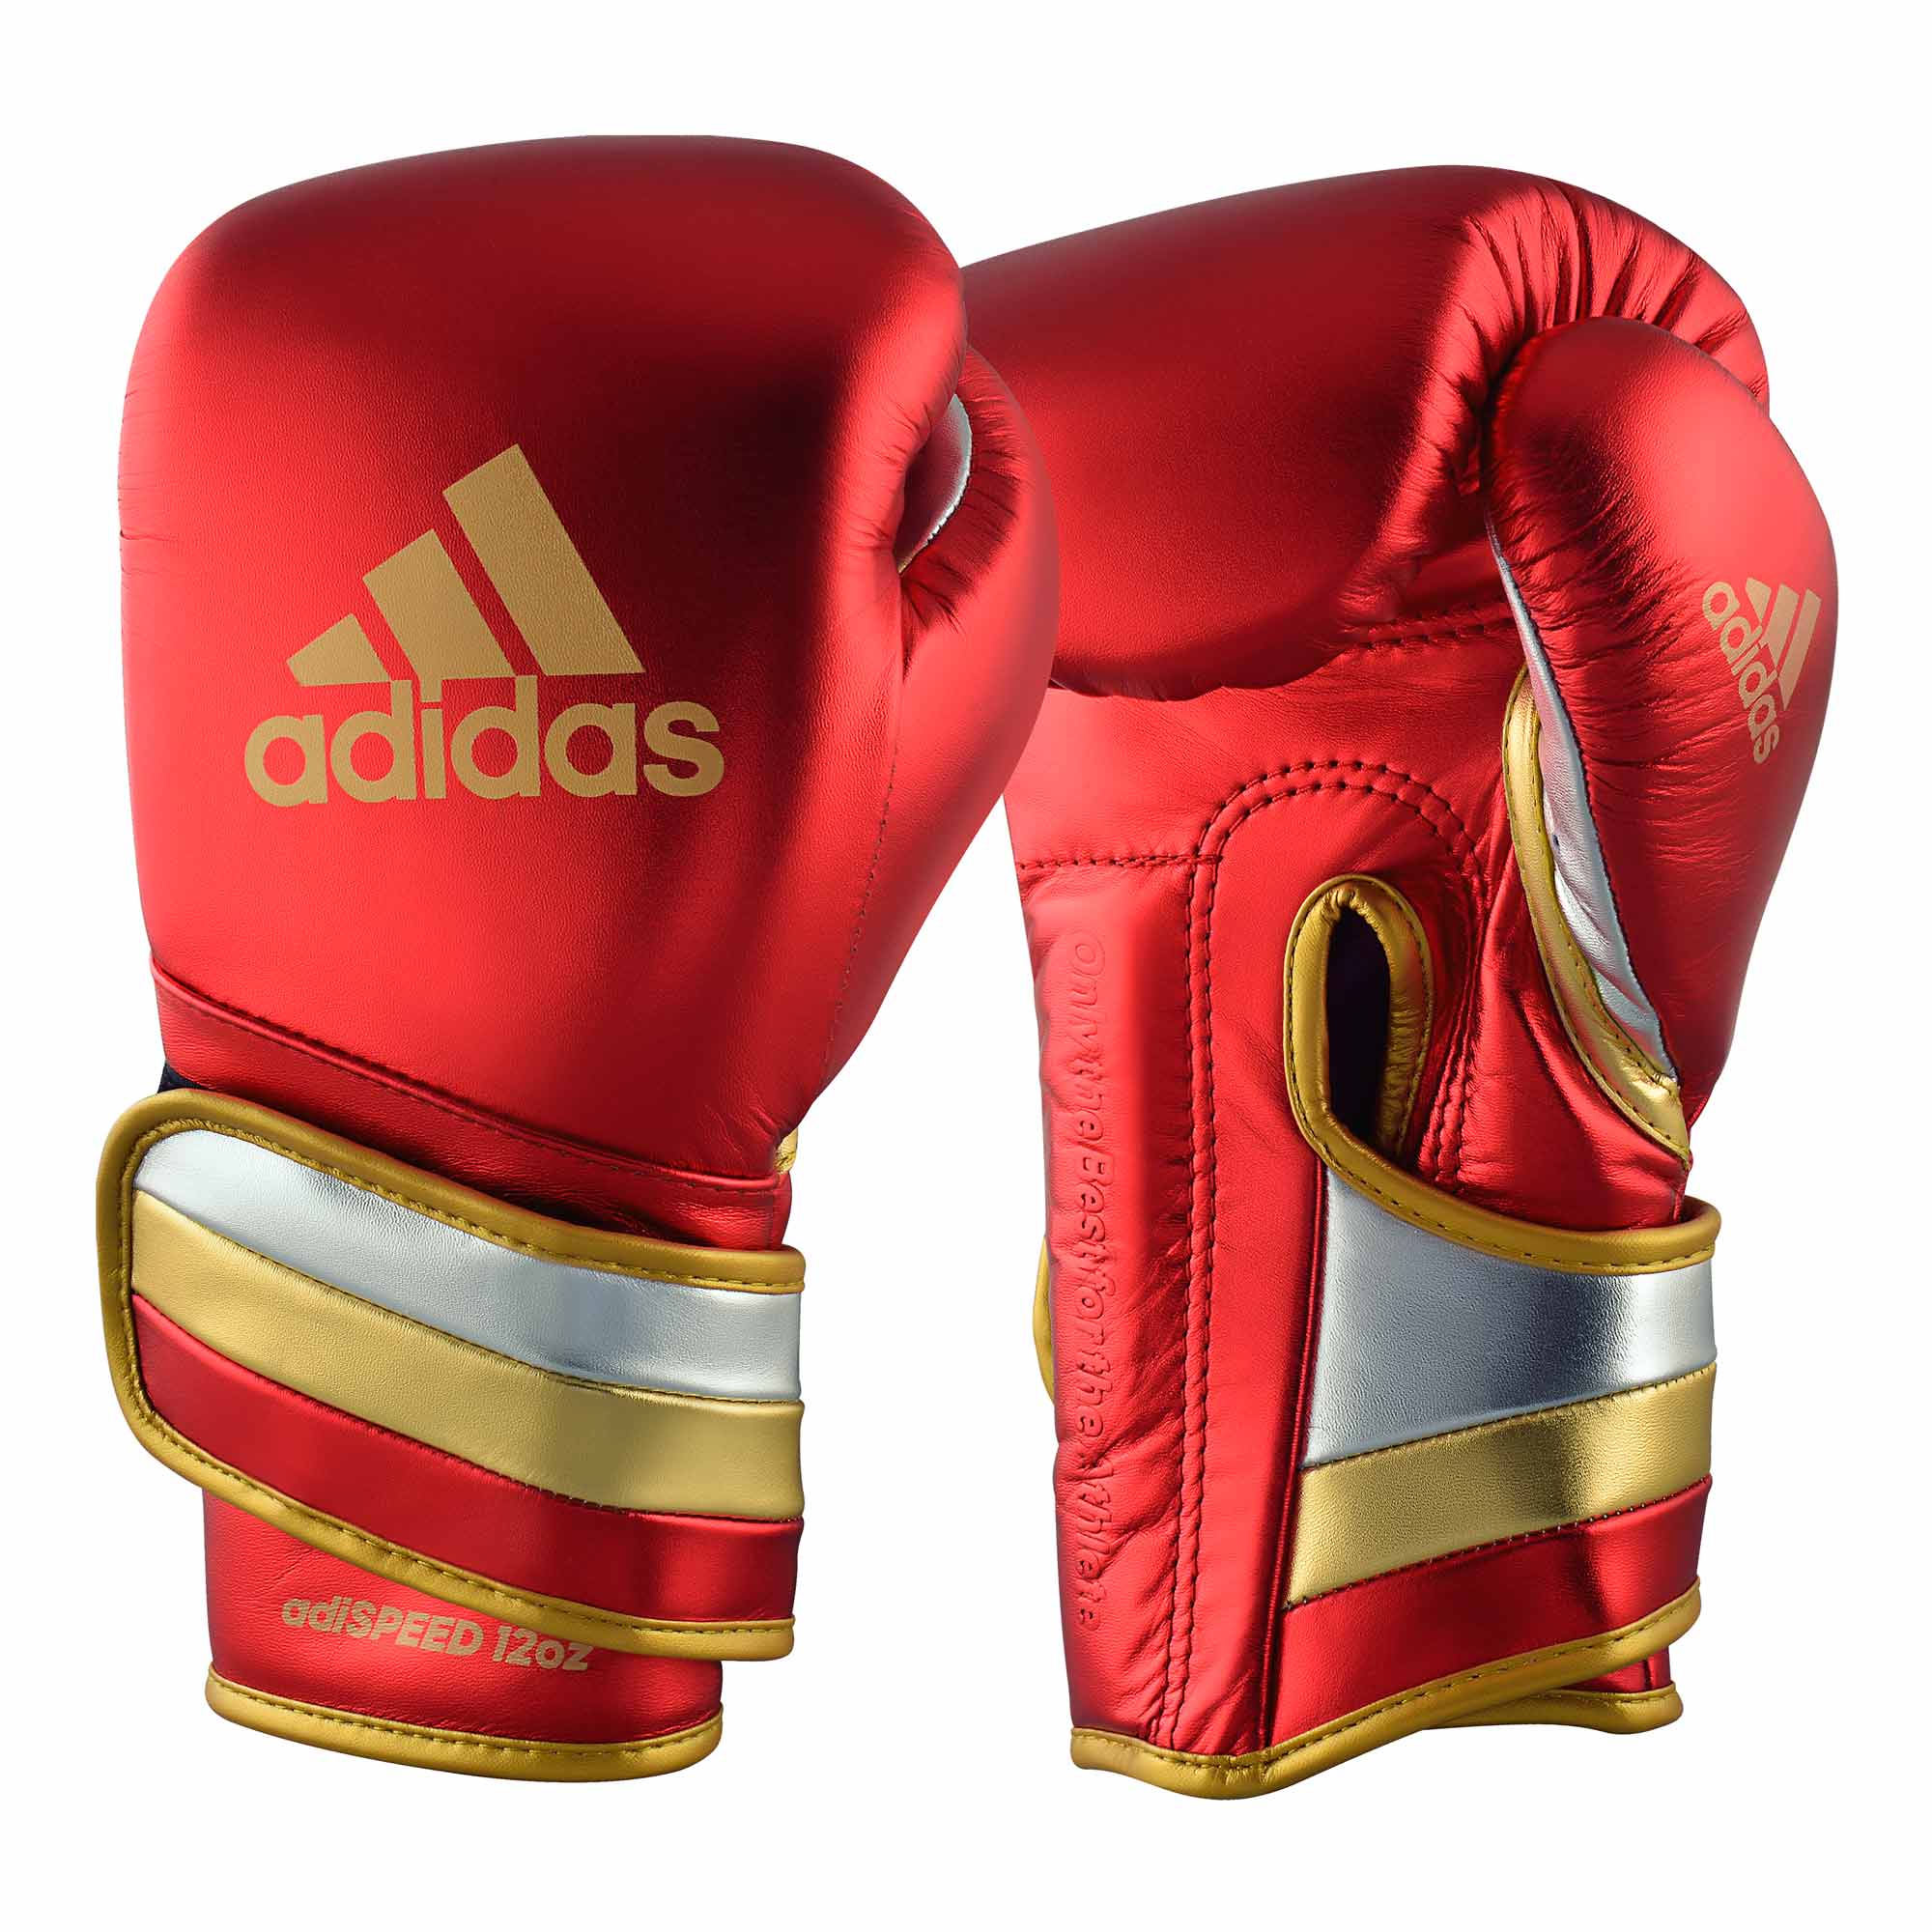 ADIDAS Boxhandschuhe Kickbox | | up Handschuhe Boxhandschuhe Ausrüstung strap | metallic/gold, red adiSPEED